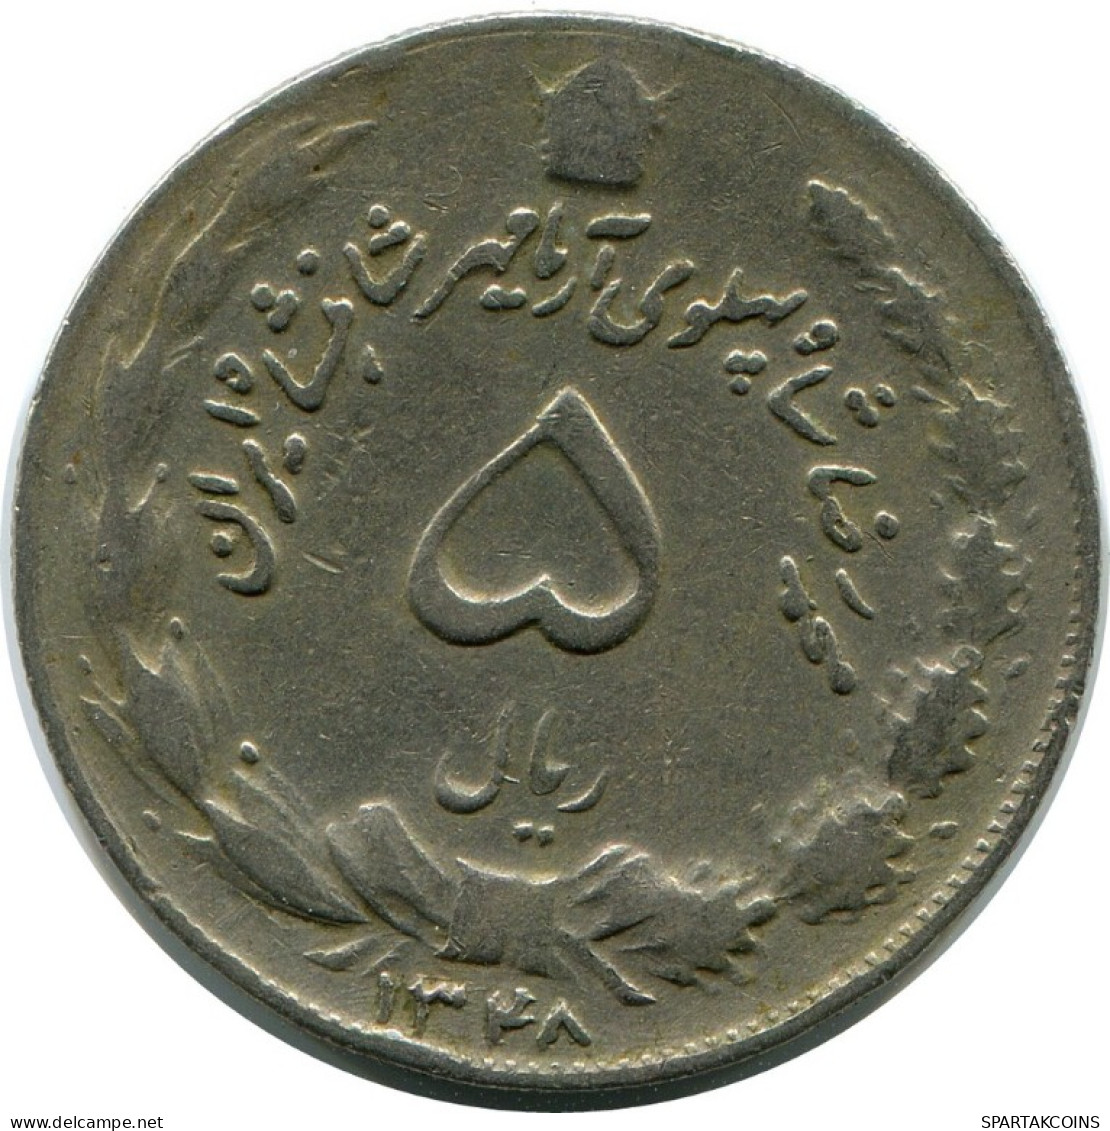 IRAN 5 RIALS 1976 ISLAMIC COIN #AK066.U.A - Iran